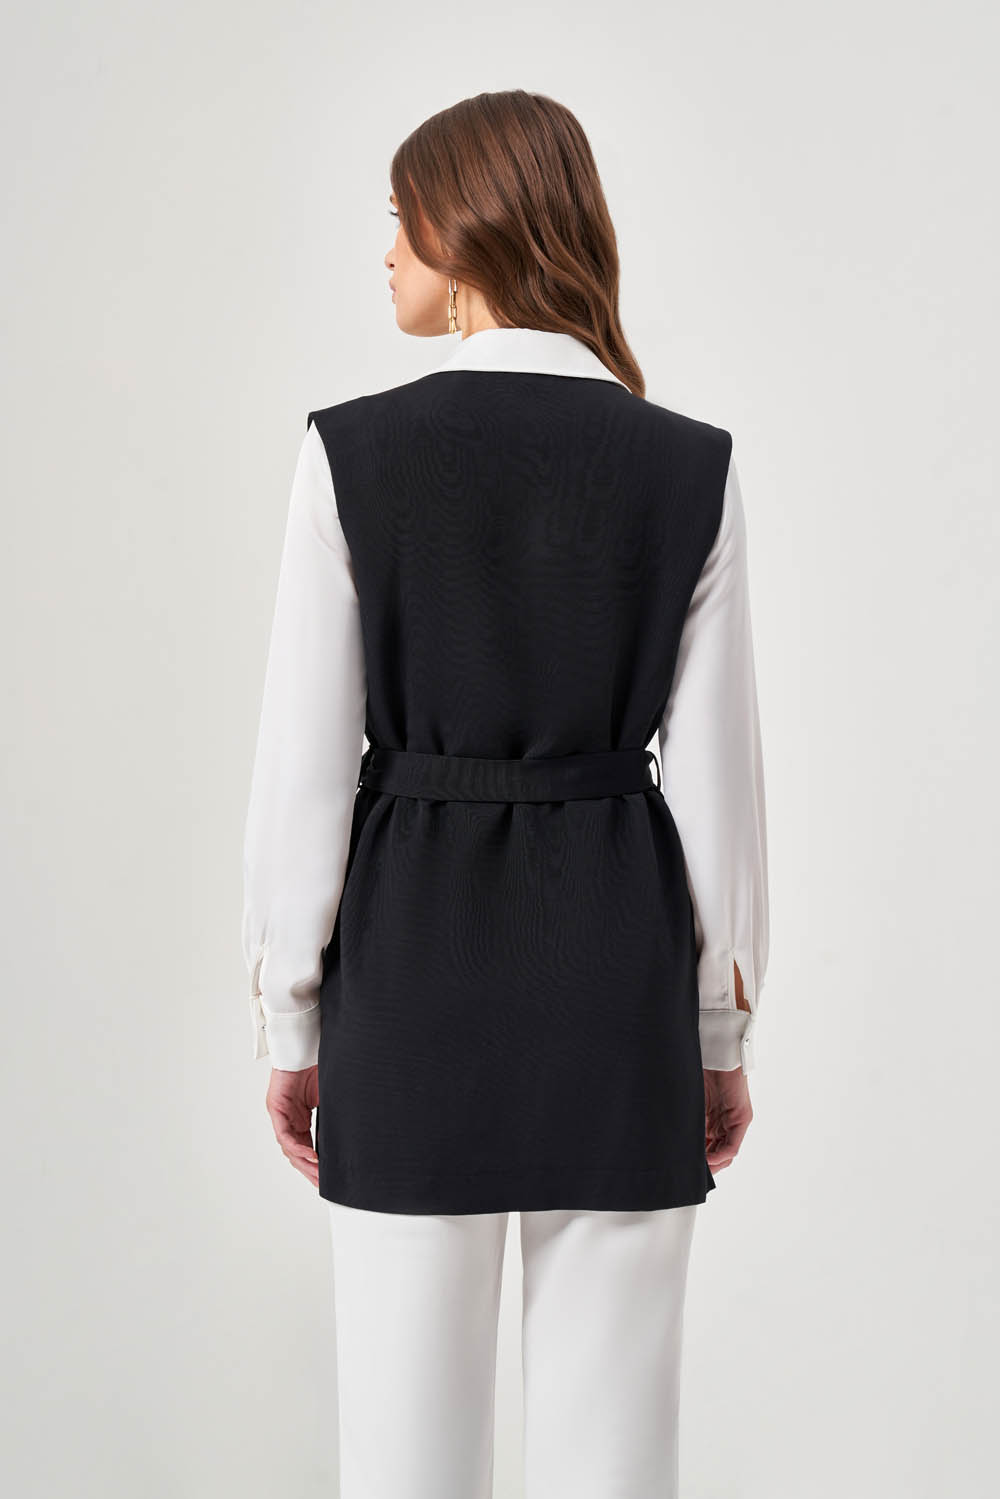 Linen Textured Black Vest With Pockets